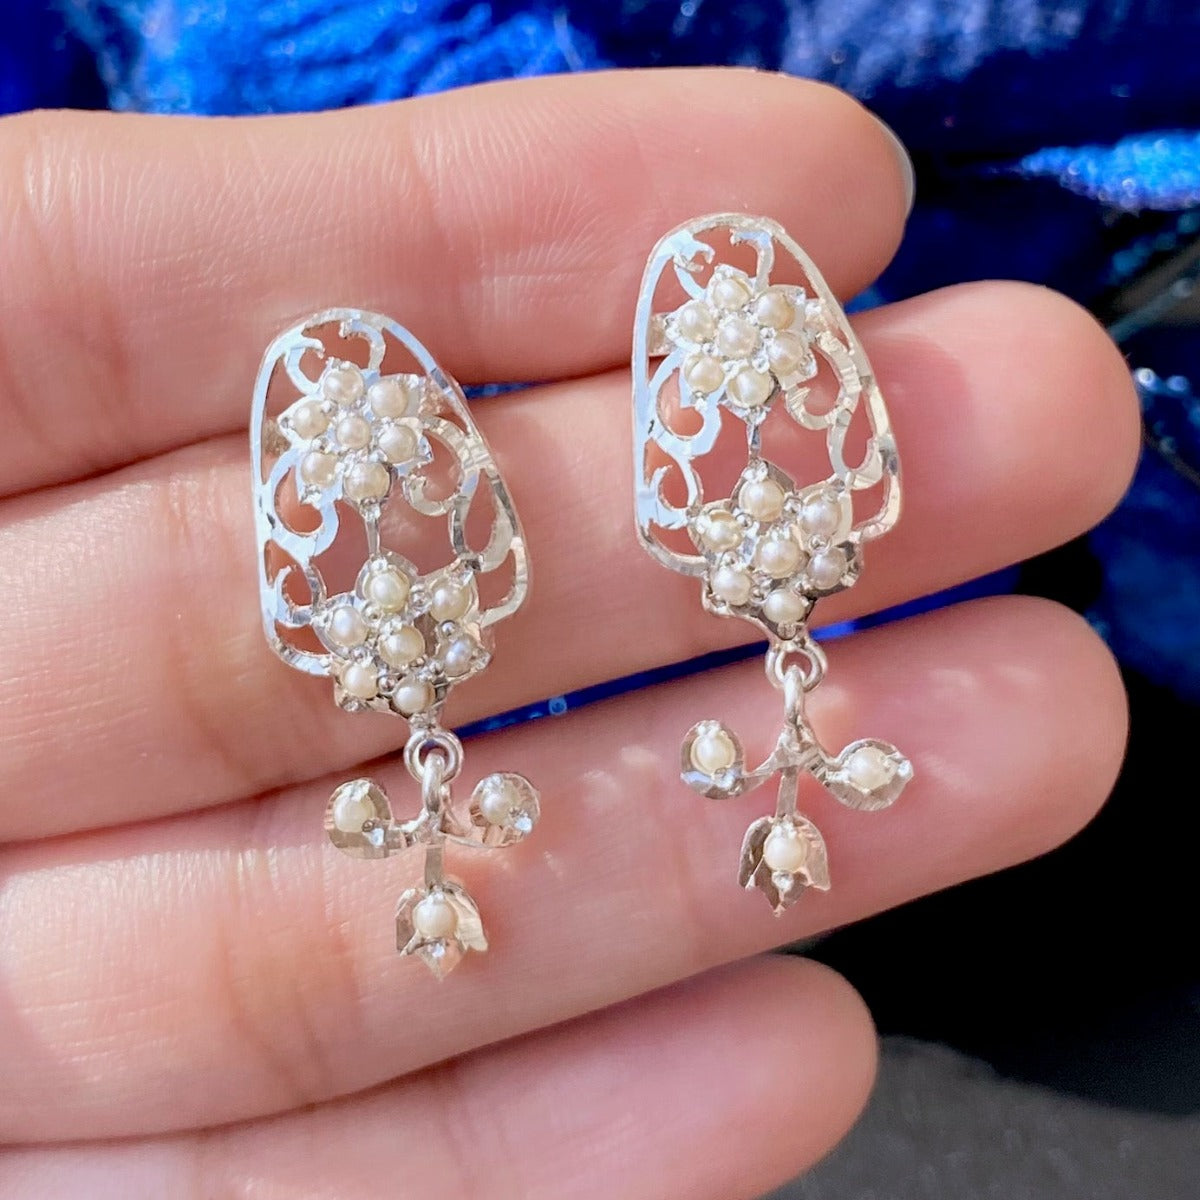 Edwardian Victorian Inspired Jewelry | Indian Earrings